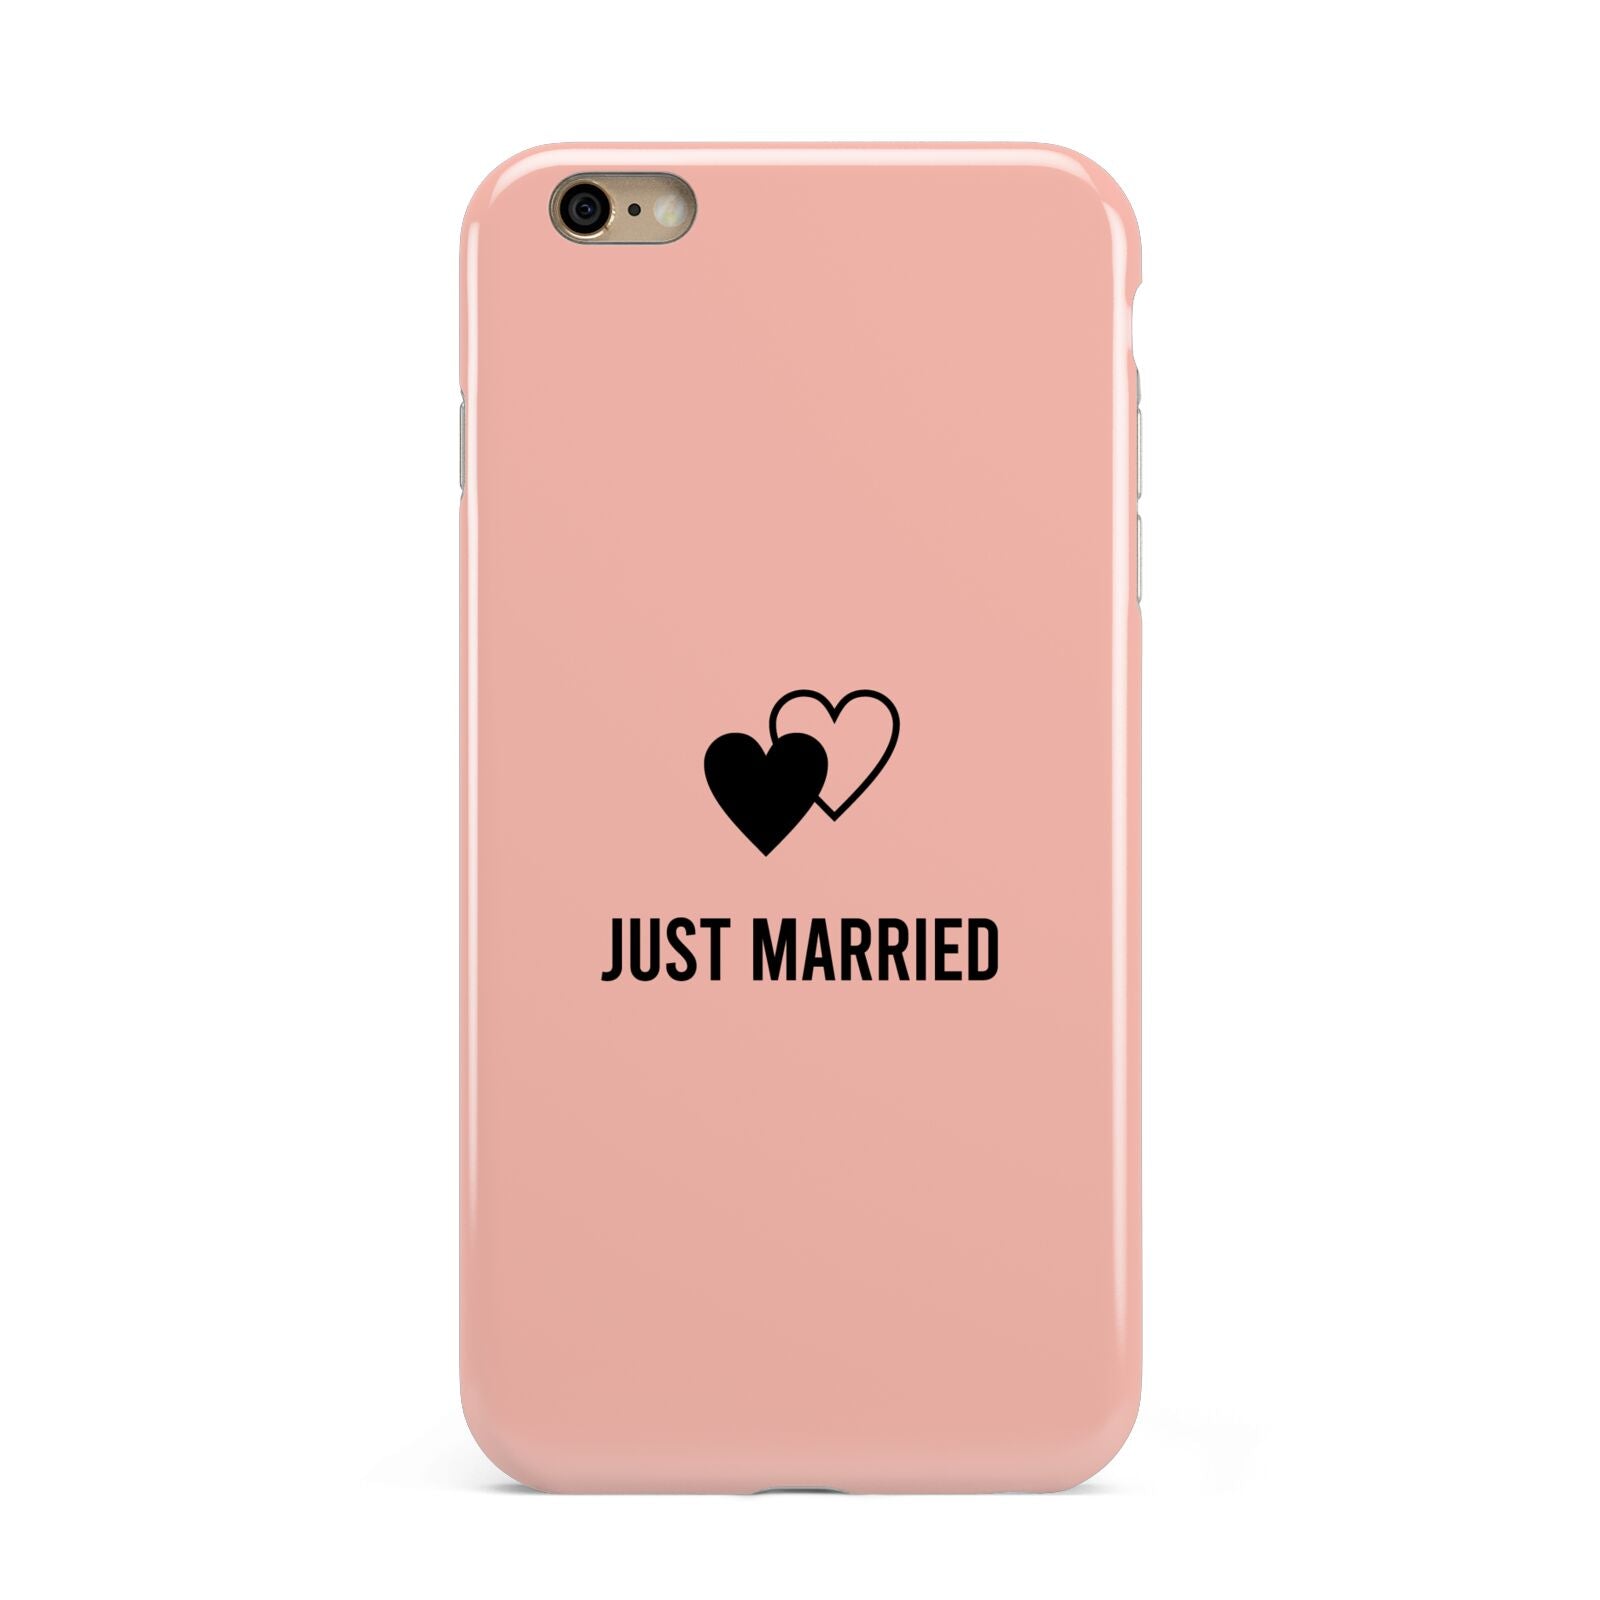 Just Married Apple iPhone 6 Plus 3D Tough Case